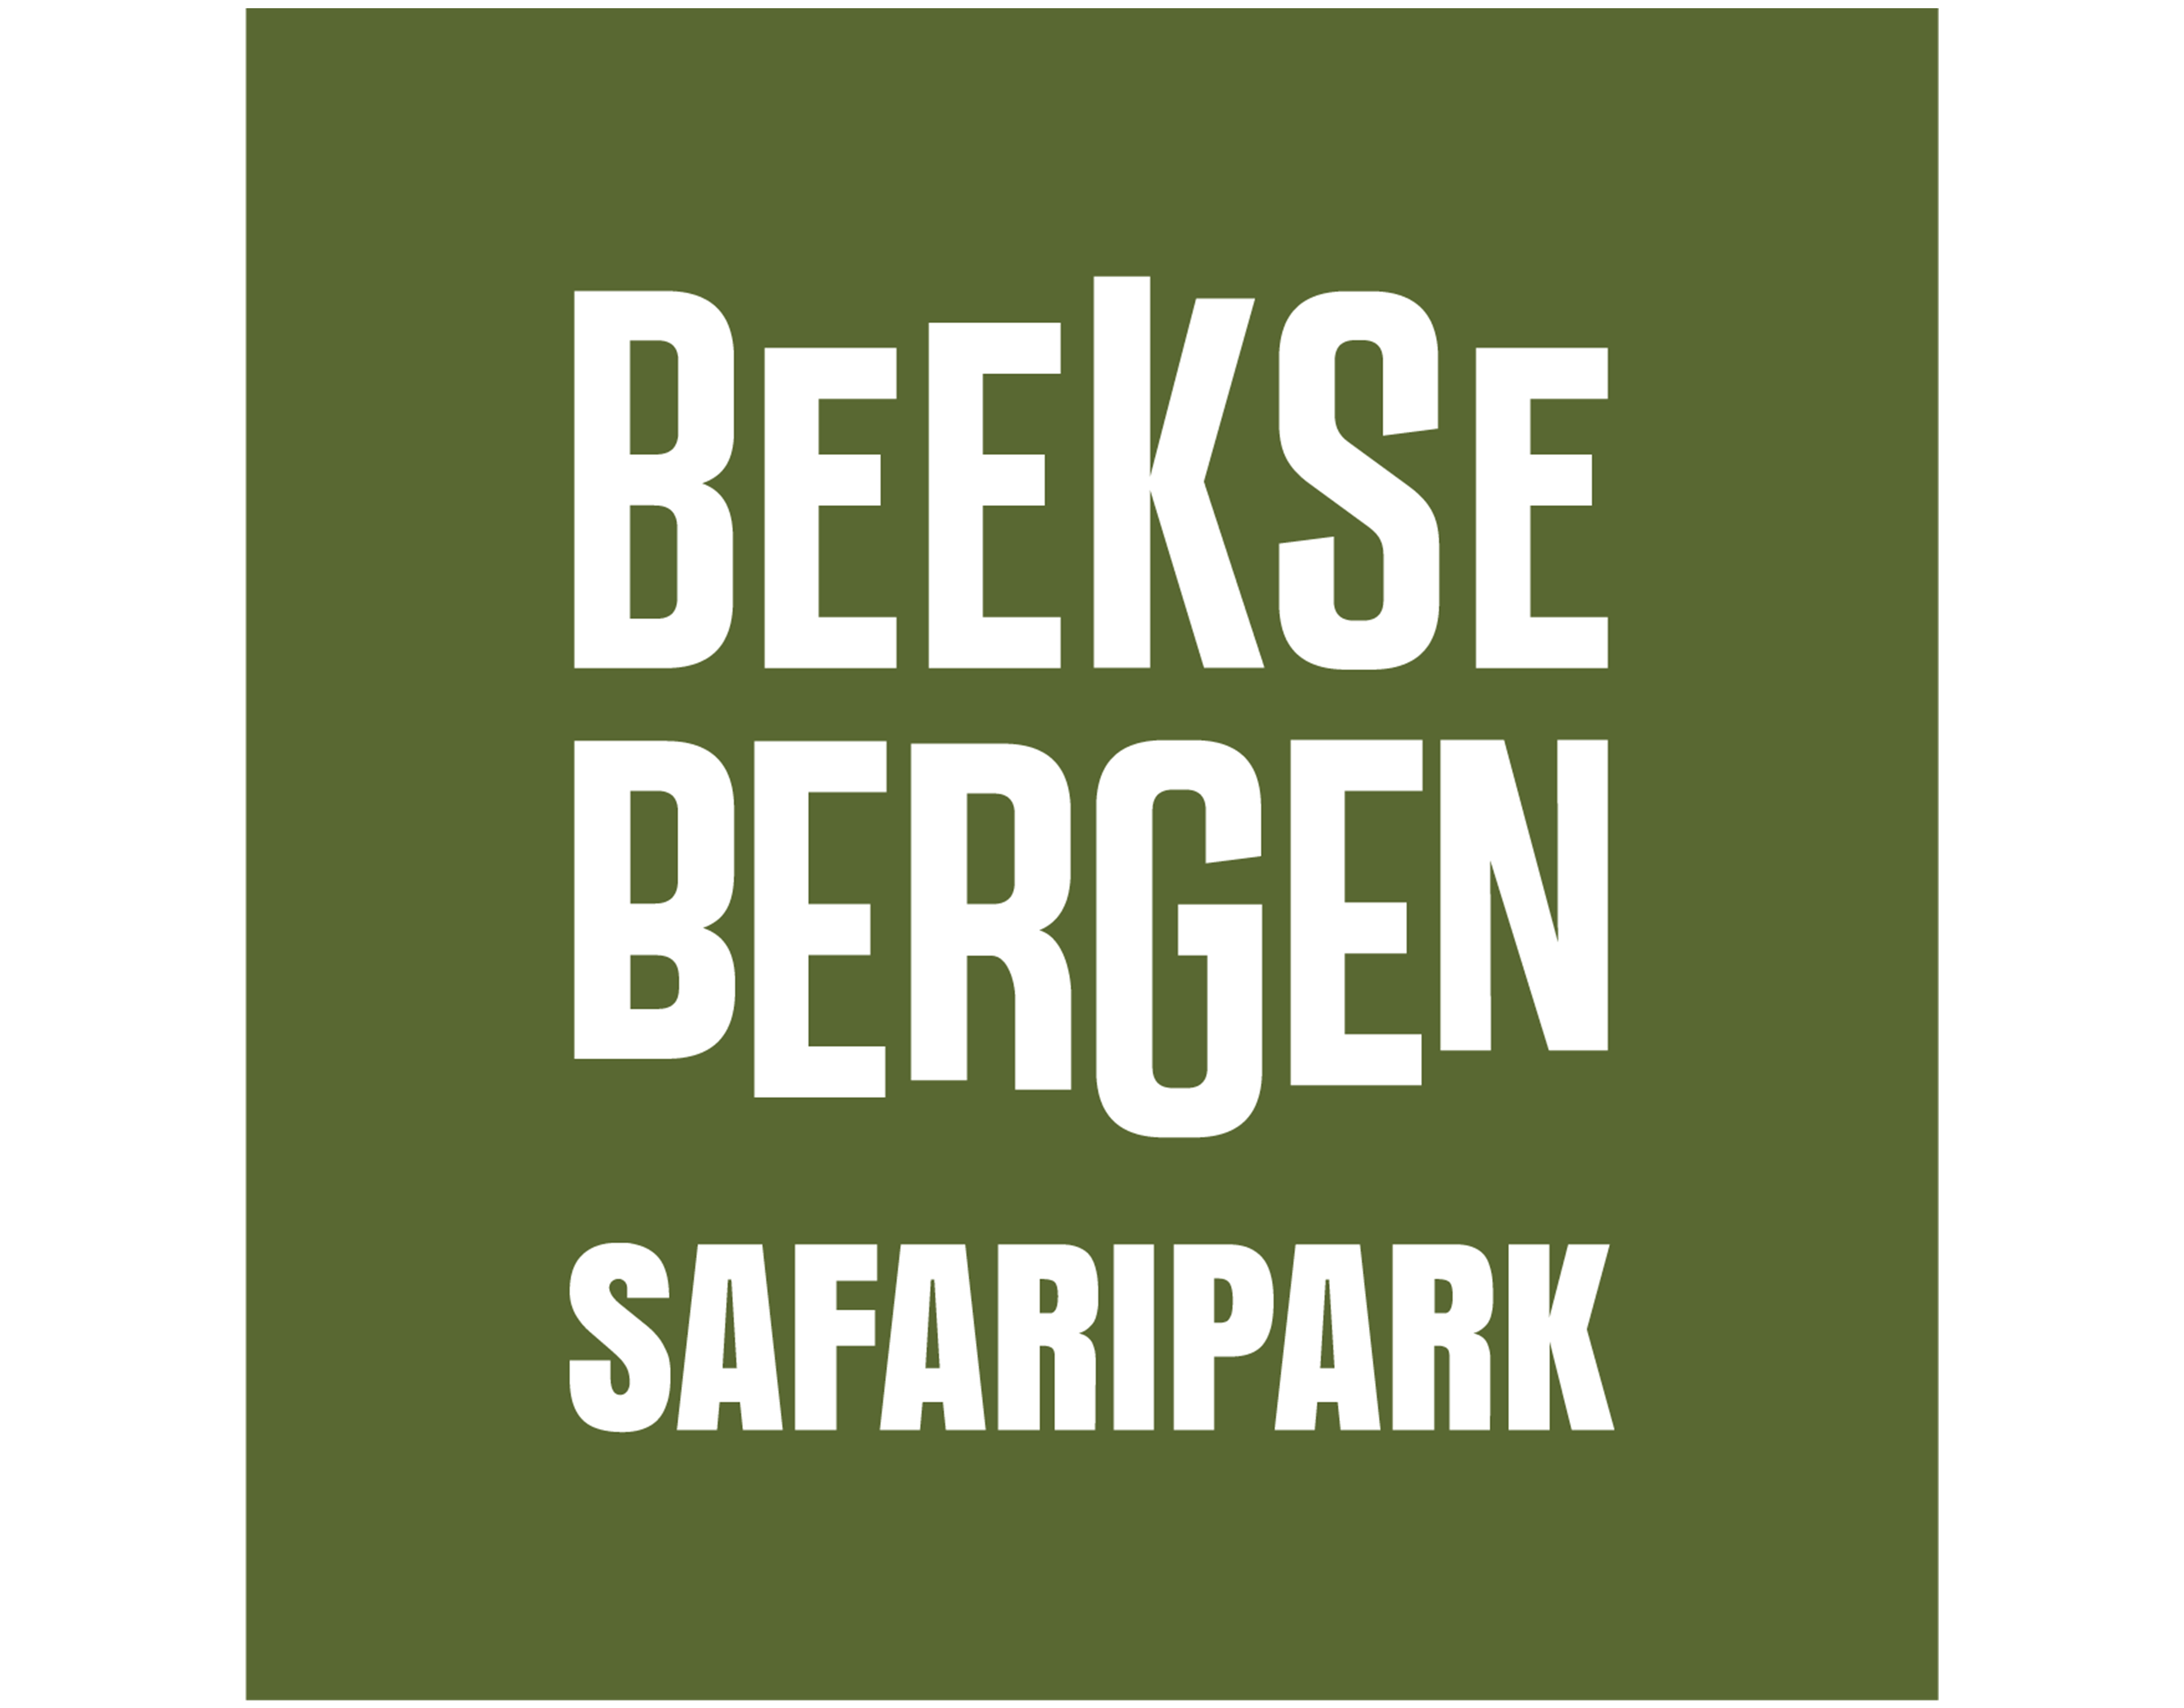 safaripark beekse bergen logo 